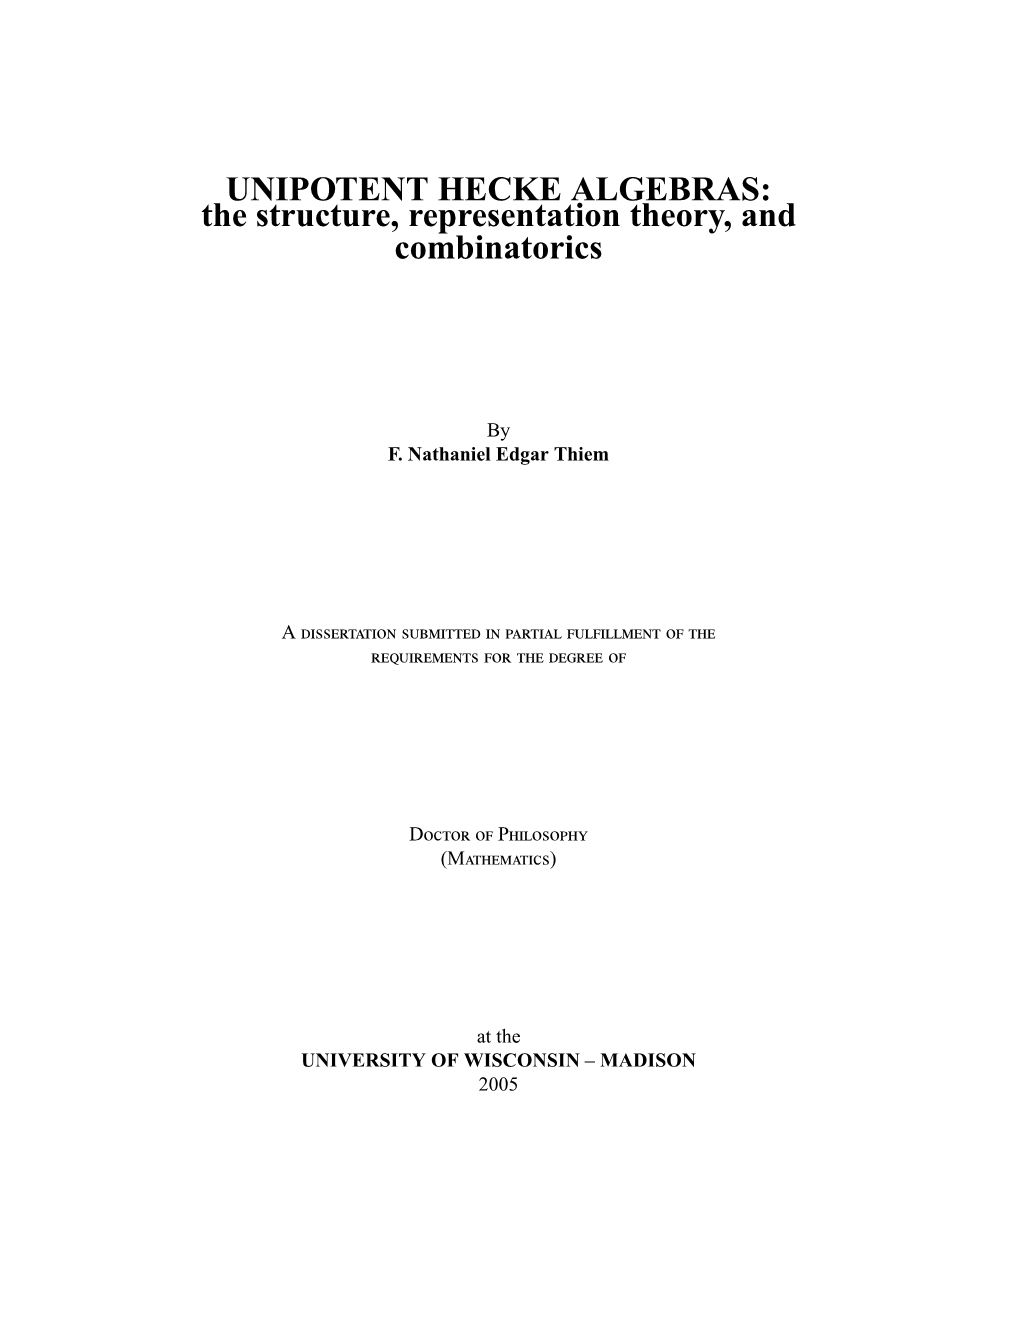 UNIPOTENT HECKE ALGEBRAS: the Structure, Representation Theory, and Combinatorics